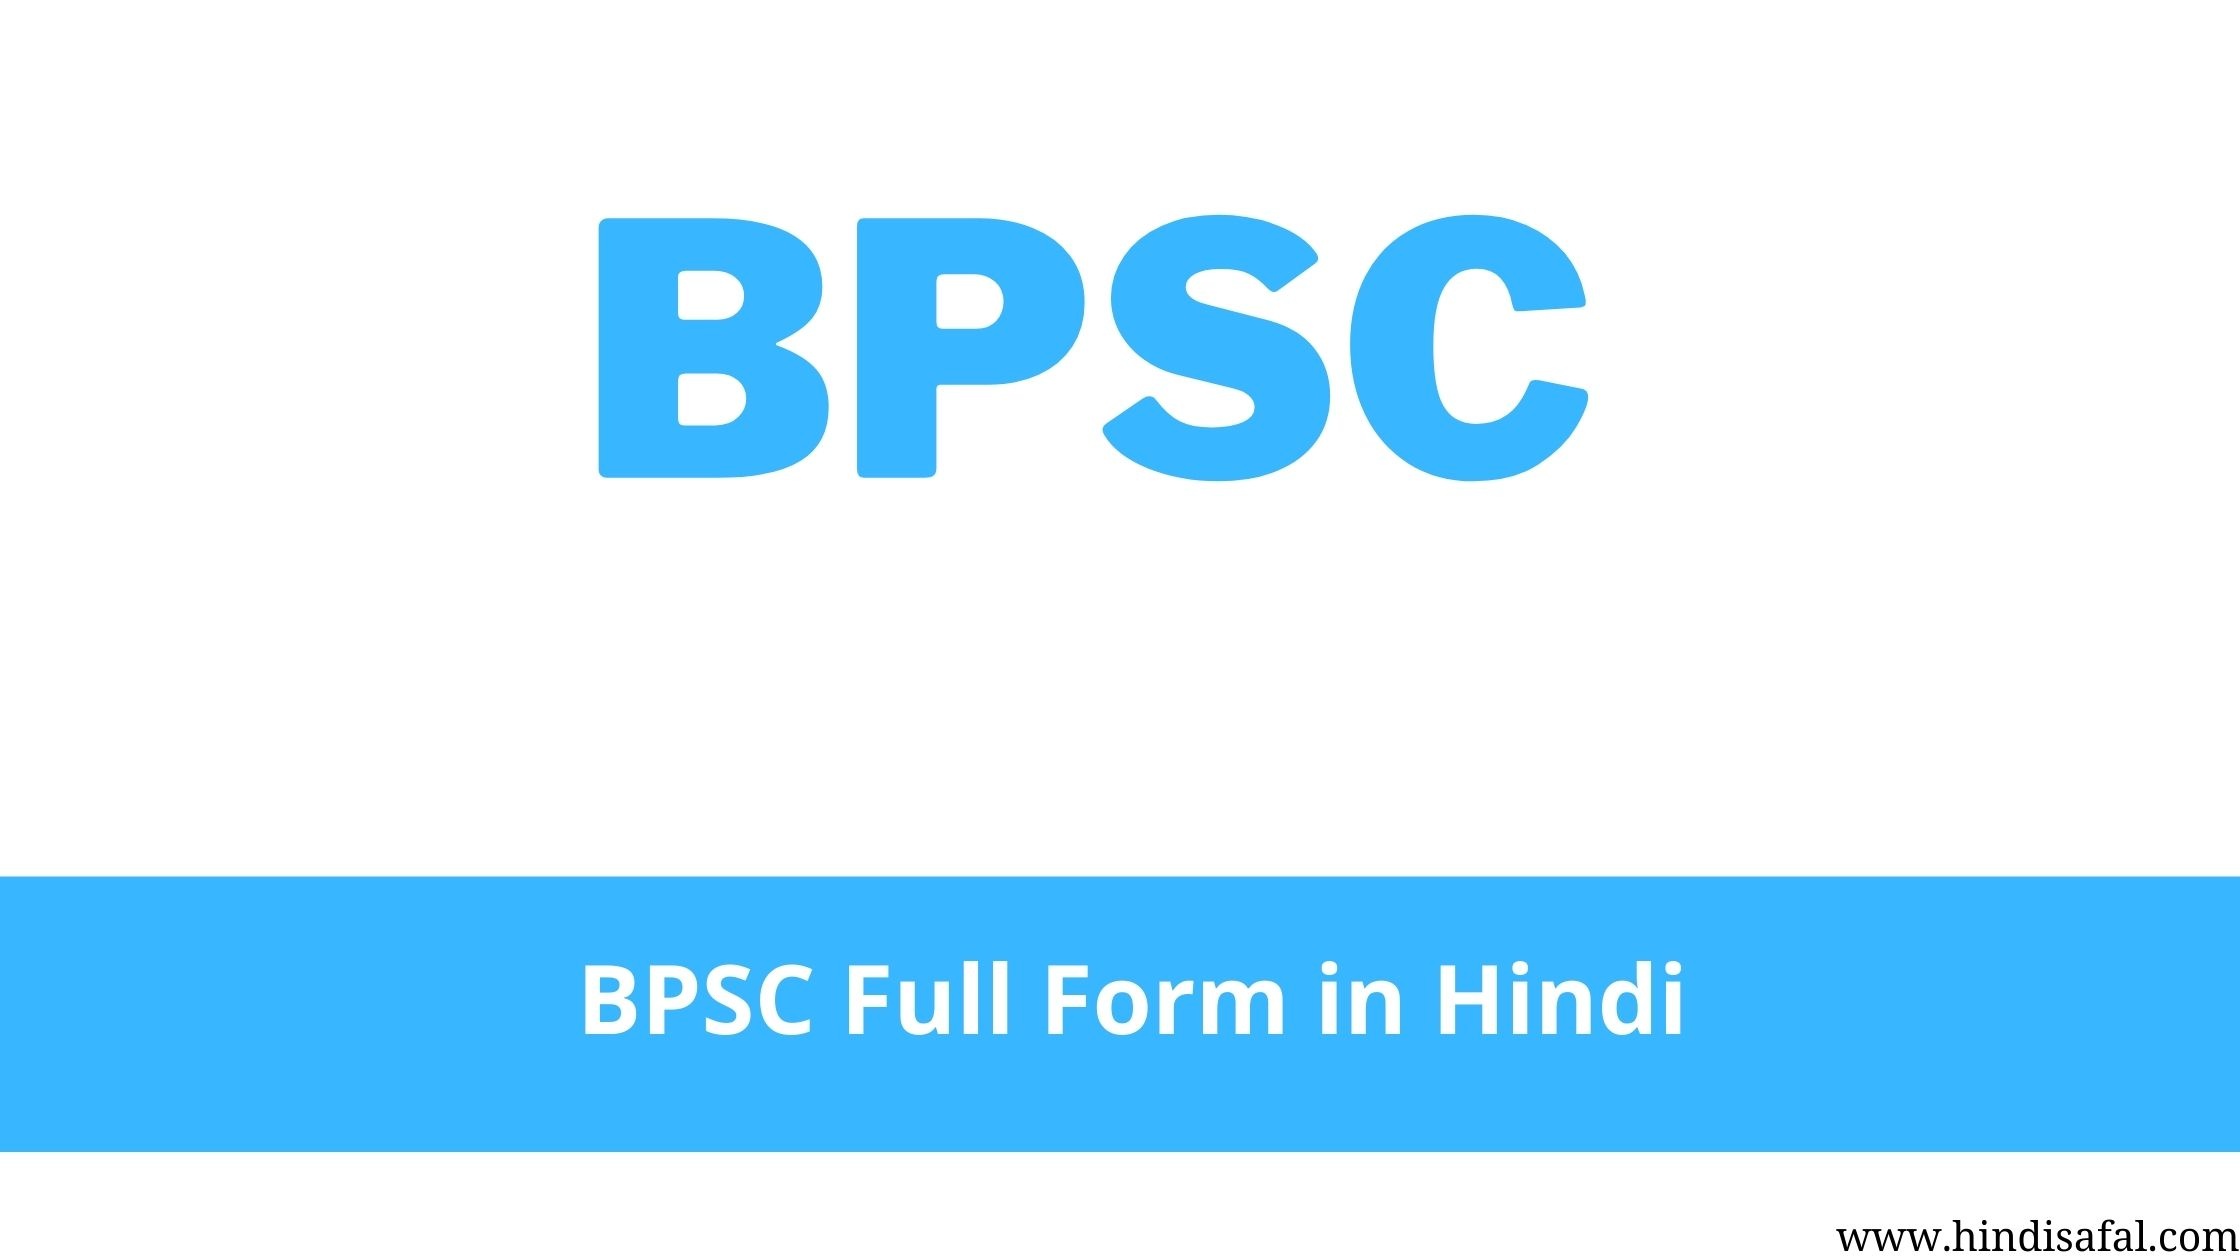 BPSC Full Form In Hindi-à¤¬à¥€à¤ªà¥€à¤à¤¸à¤¸à¥€ à¤•à¥à¤¯à¤¾ à¤¹à¥ˆ? | Hindisafal